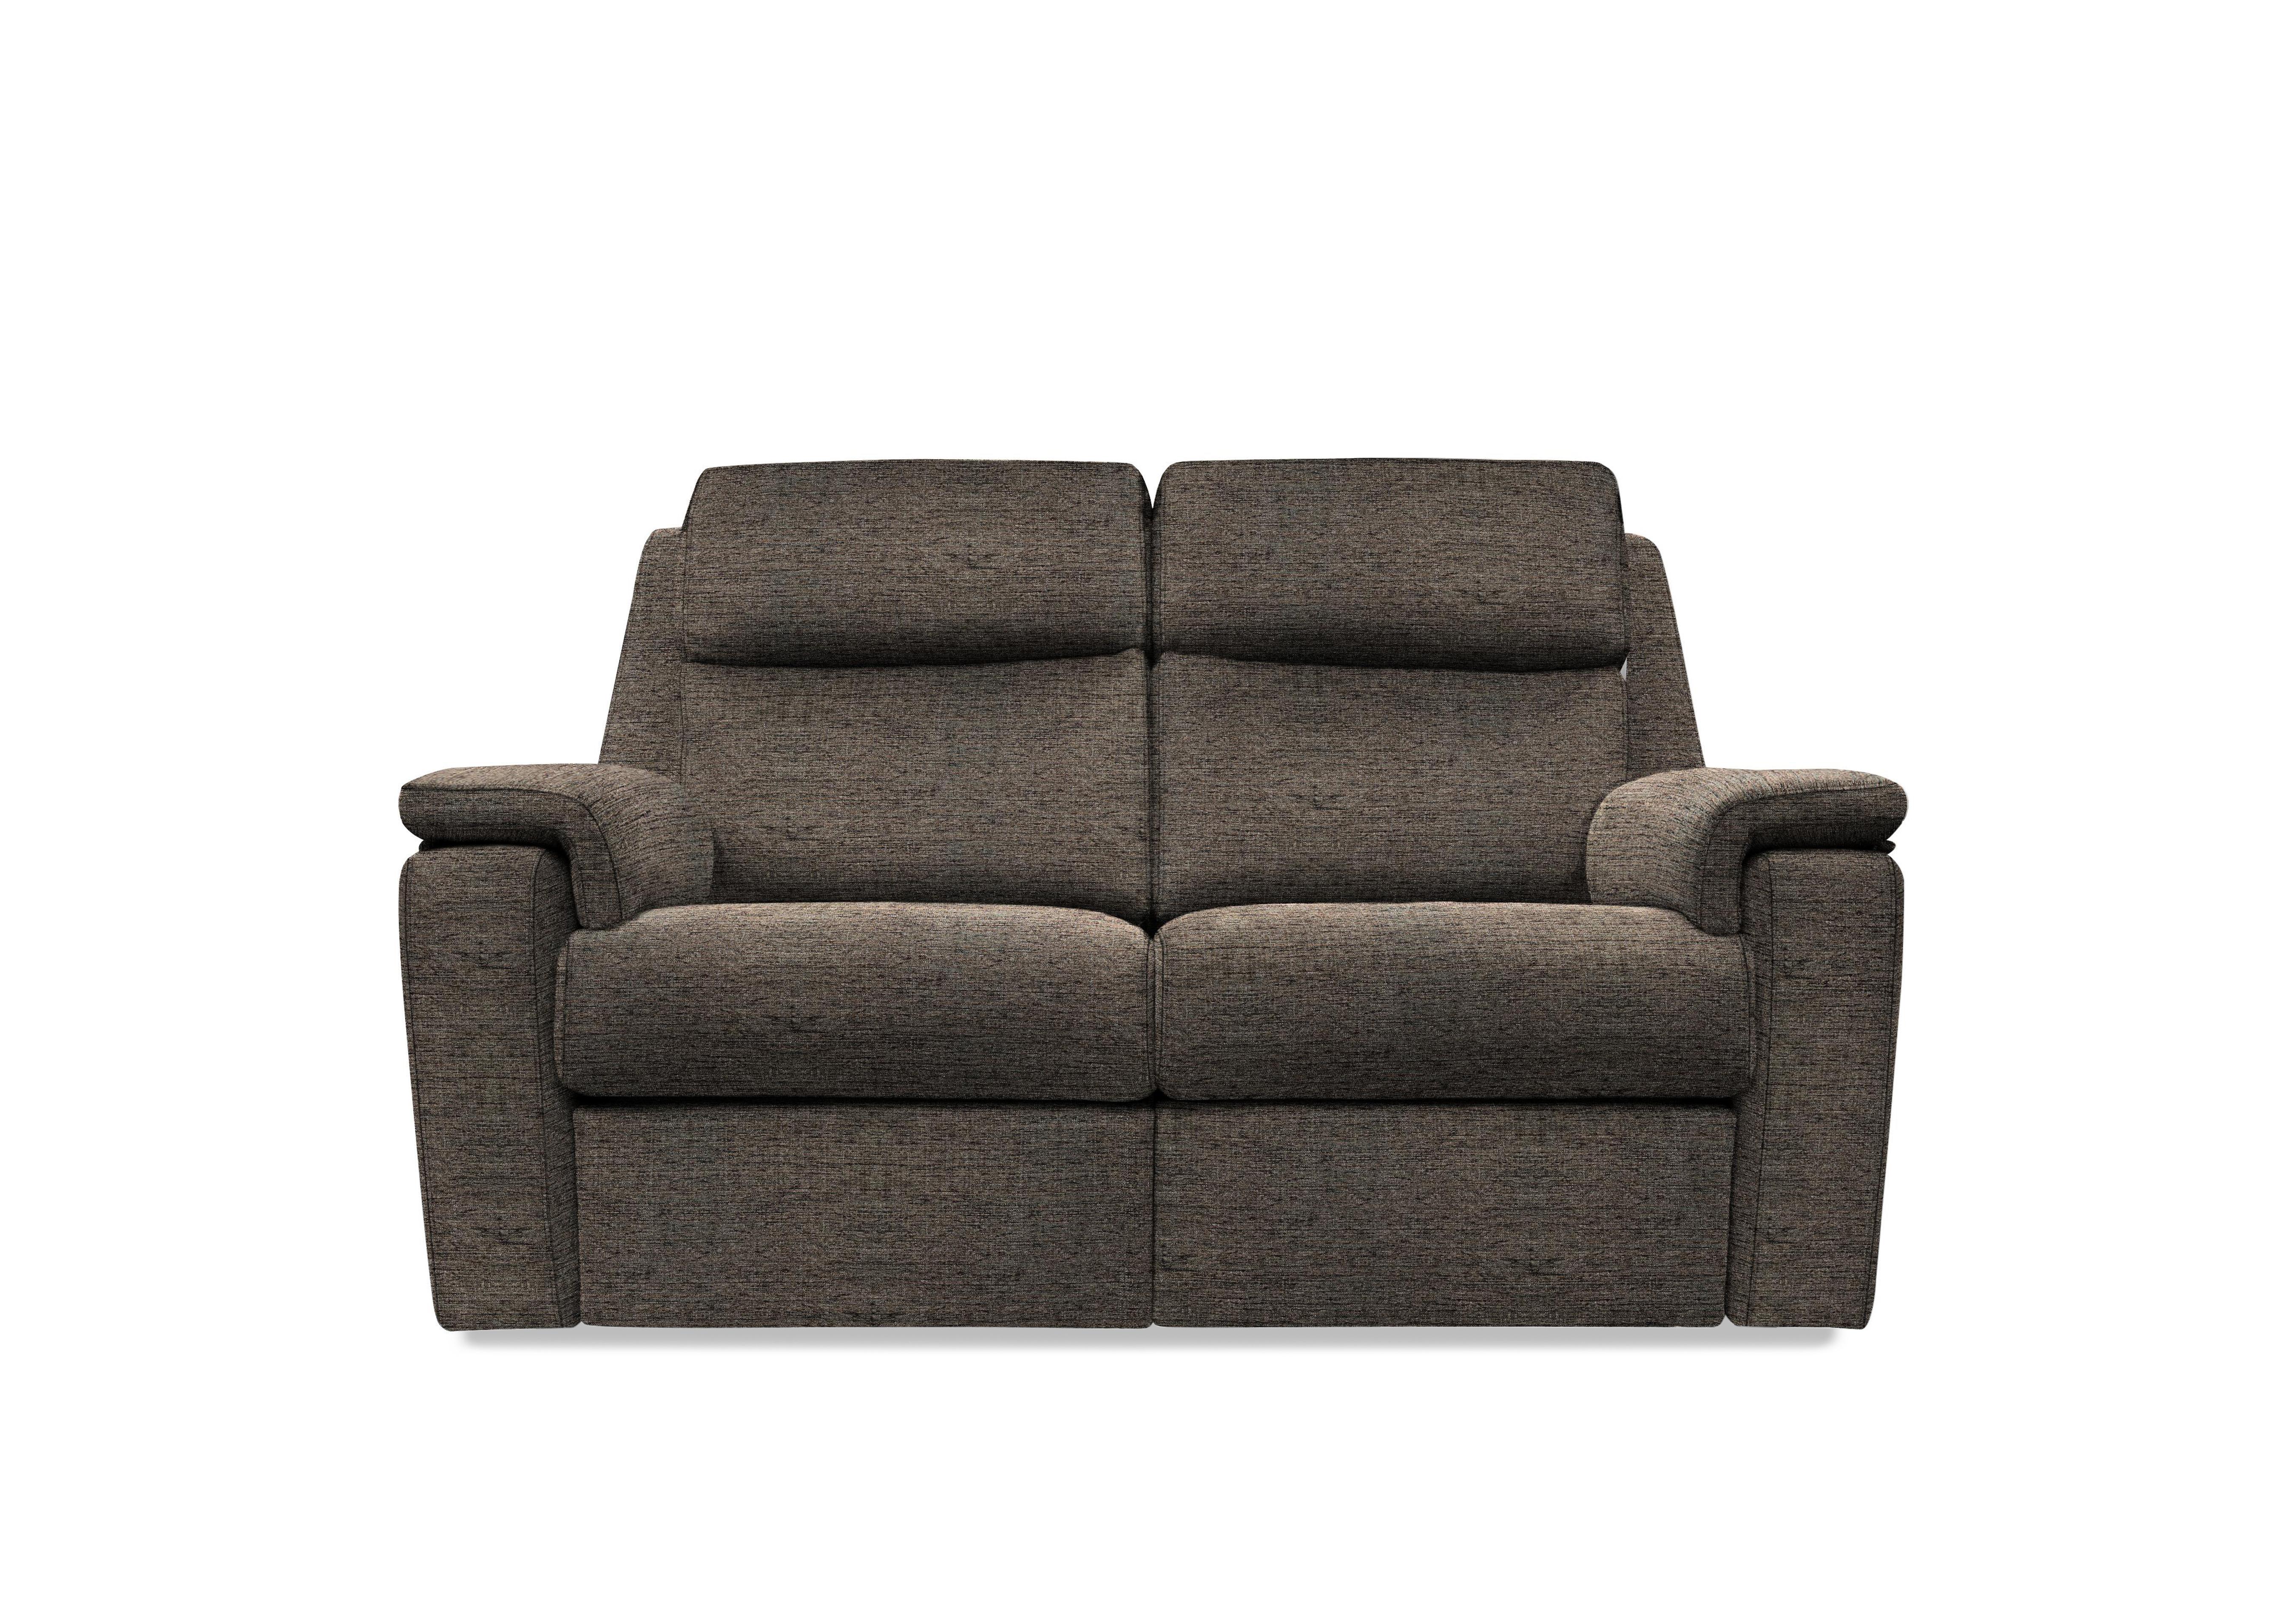 Thornbury 2 Seater Fabric Sofa in A008 Yarn Slate on Furniture Village